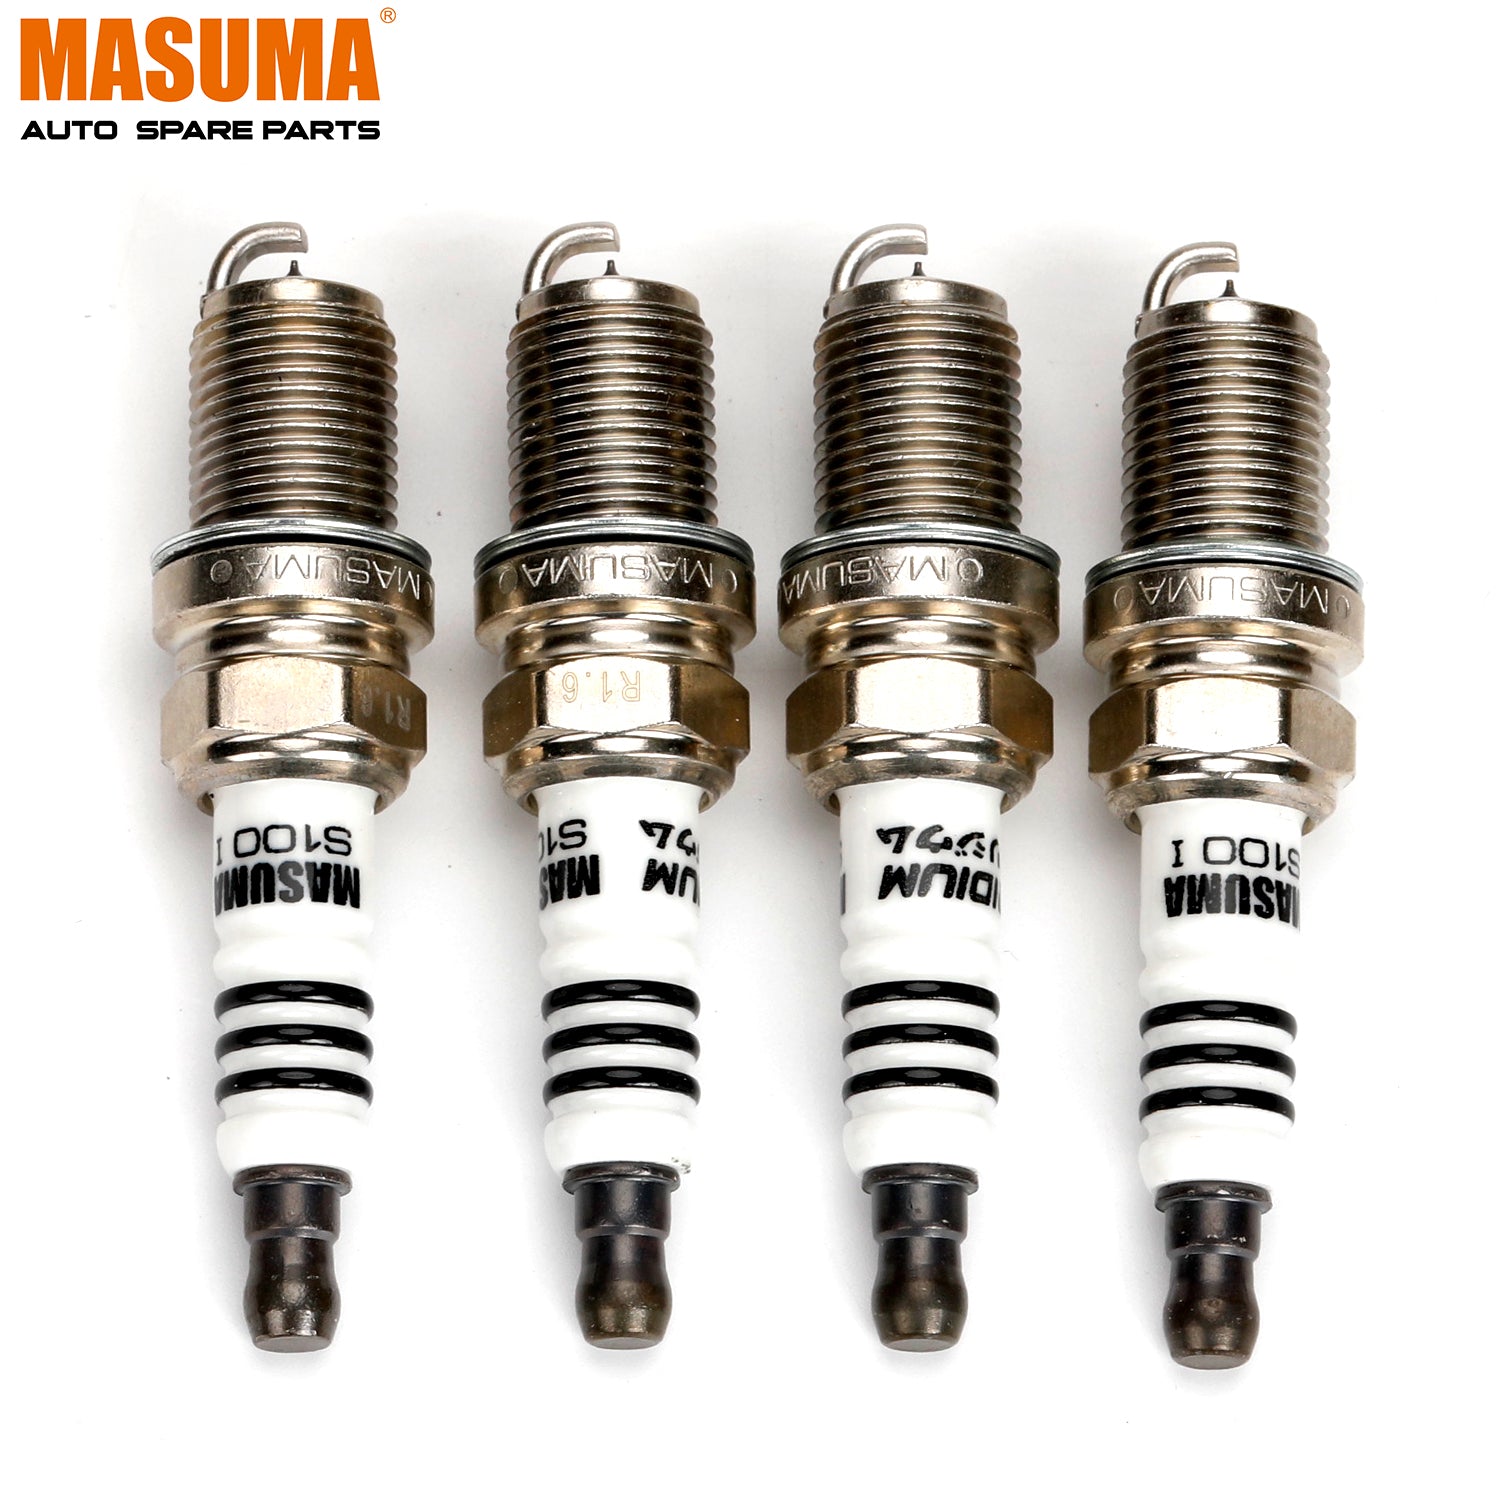 S100I MASUMA Automotive Parts Accessories Wholesale Auto Platinum Double Iridium Spark Plug